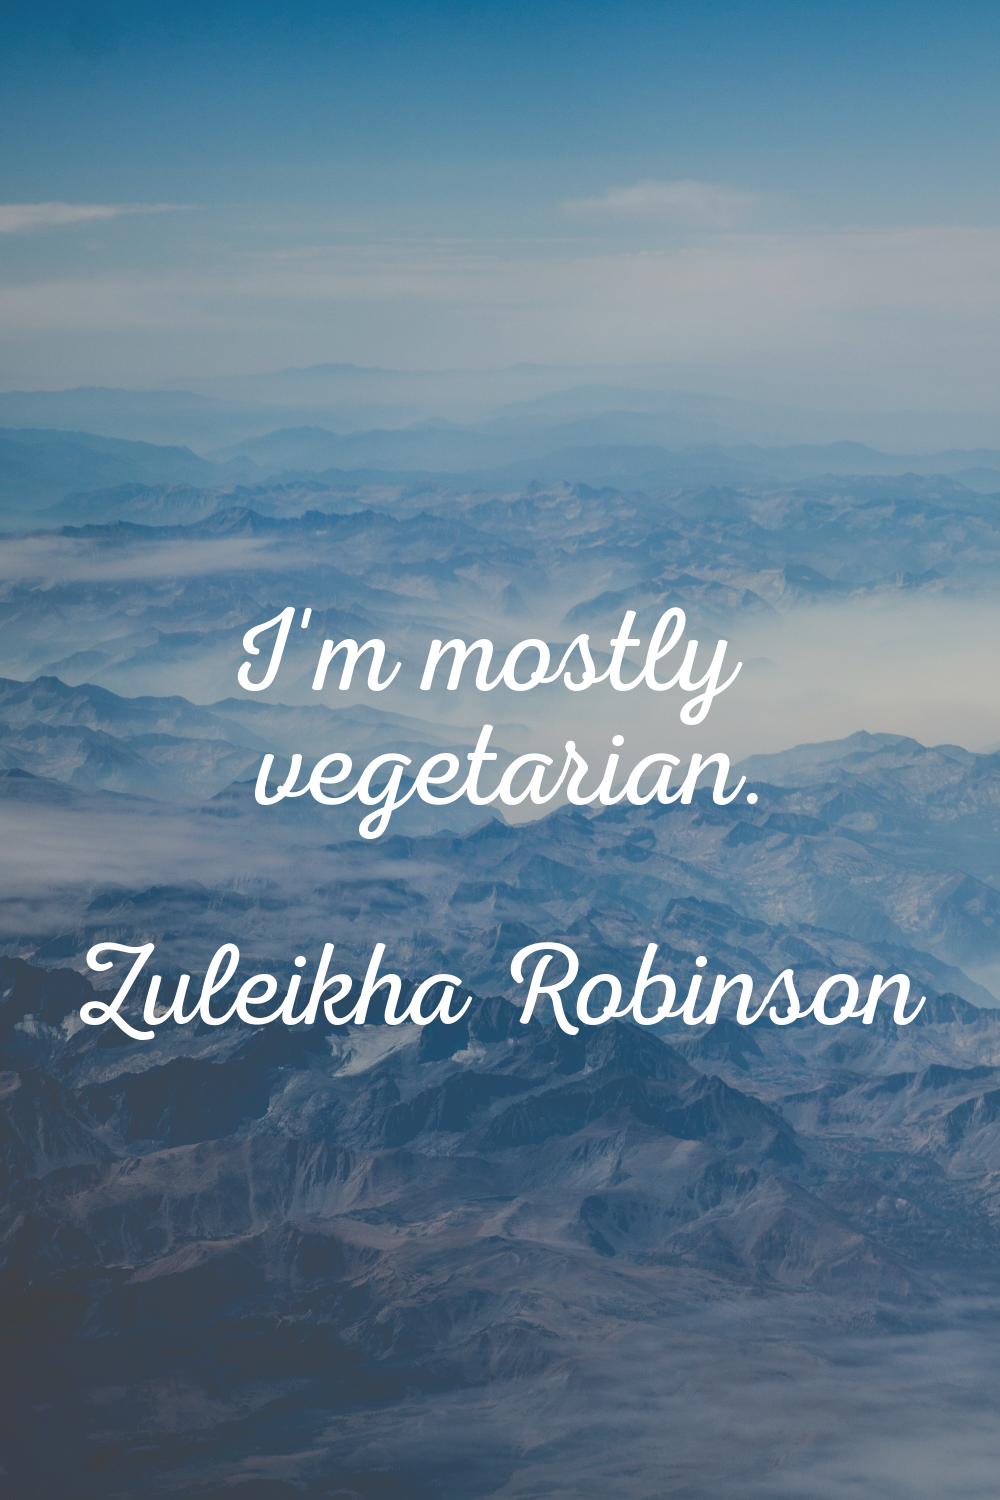 I'm mostly vegetarian.